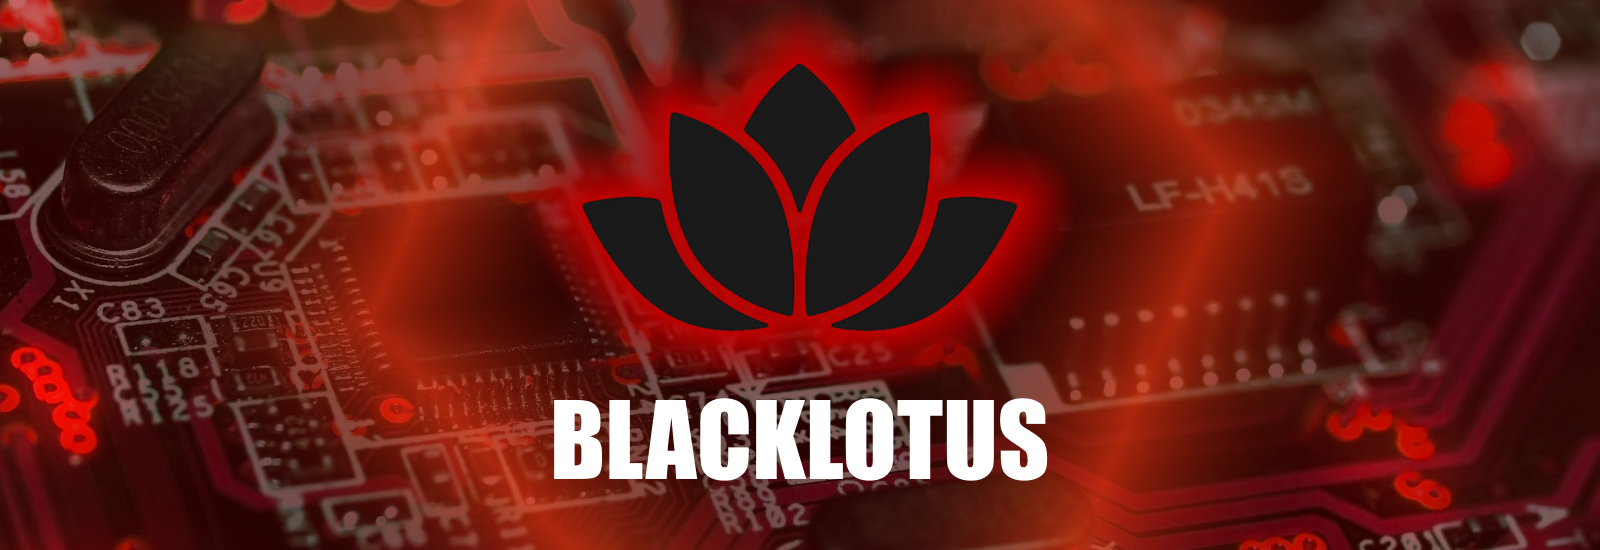 BlackLotus-header